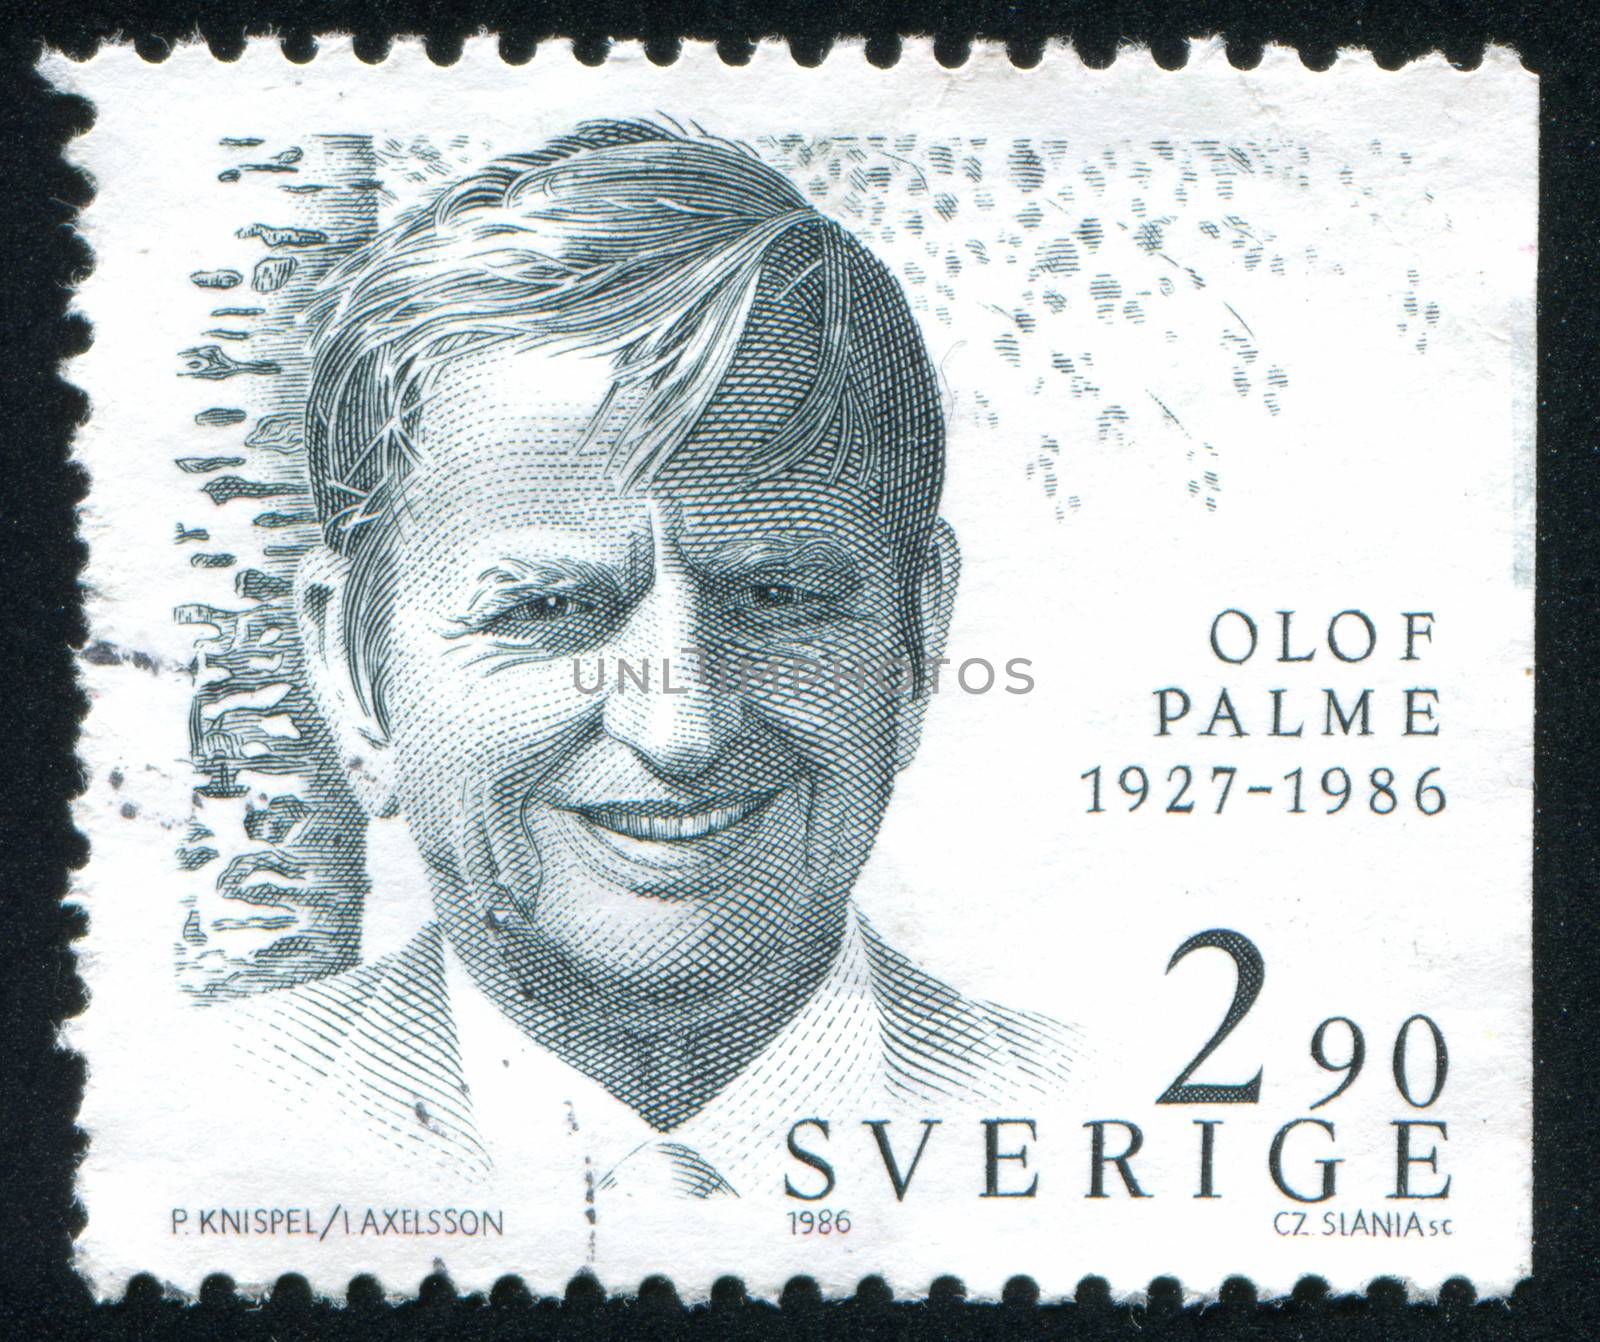 SWEDEN - CIRCA 1986: stamp printed by Sweden, shows Olof Palme, Prime Minister, circa 1986